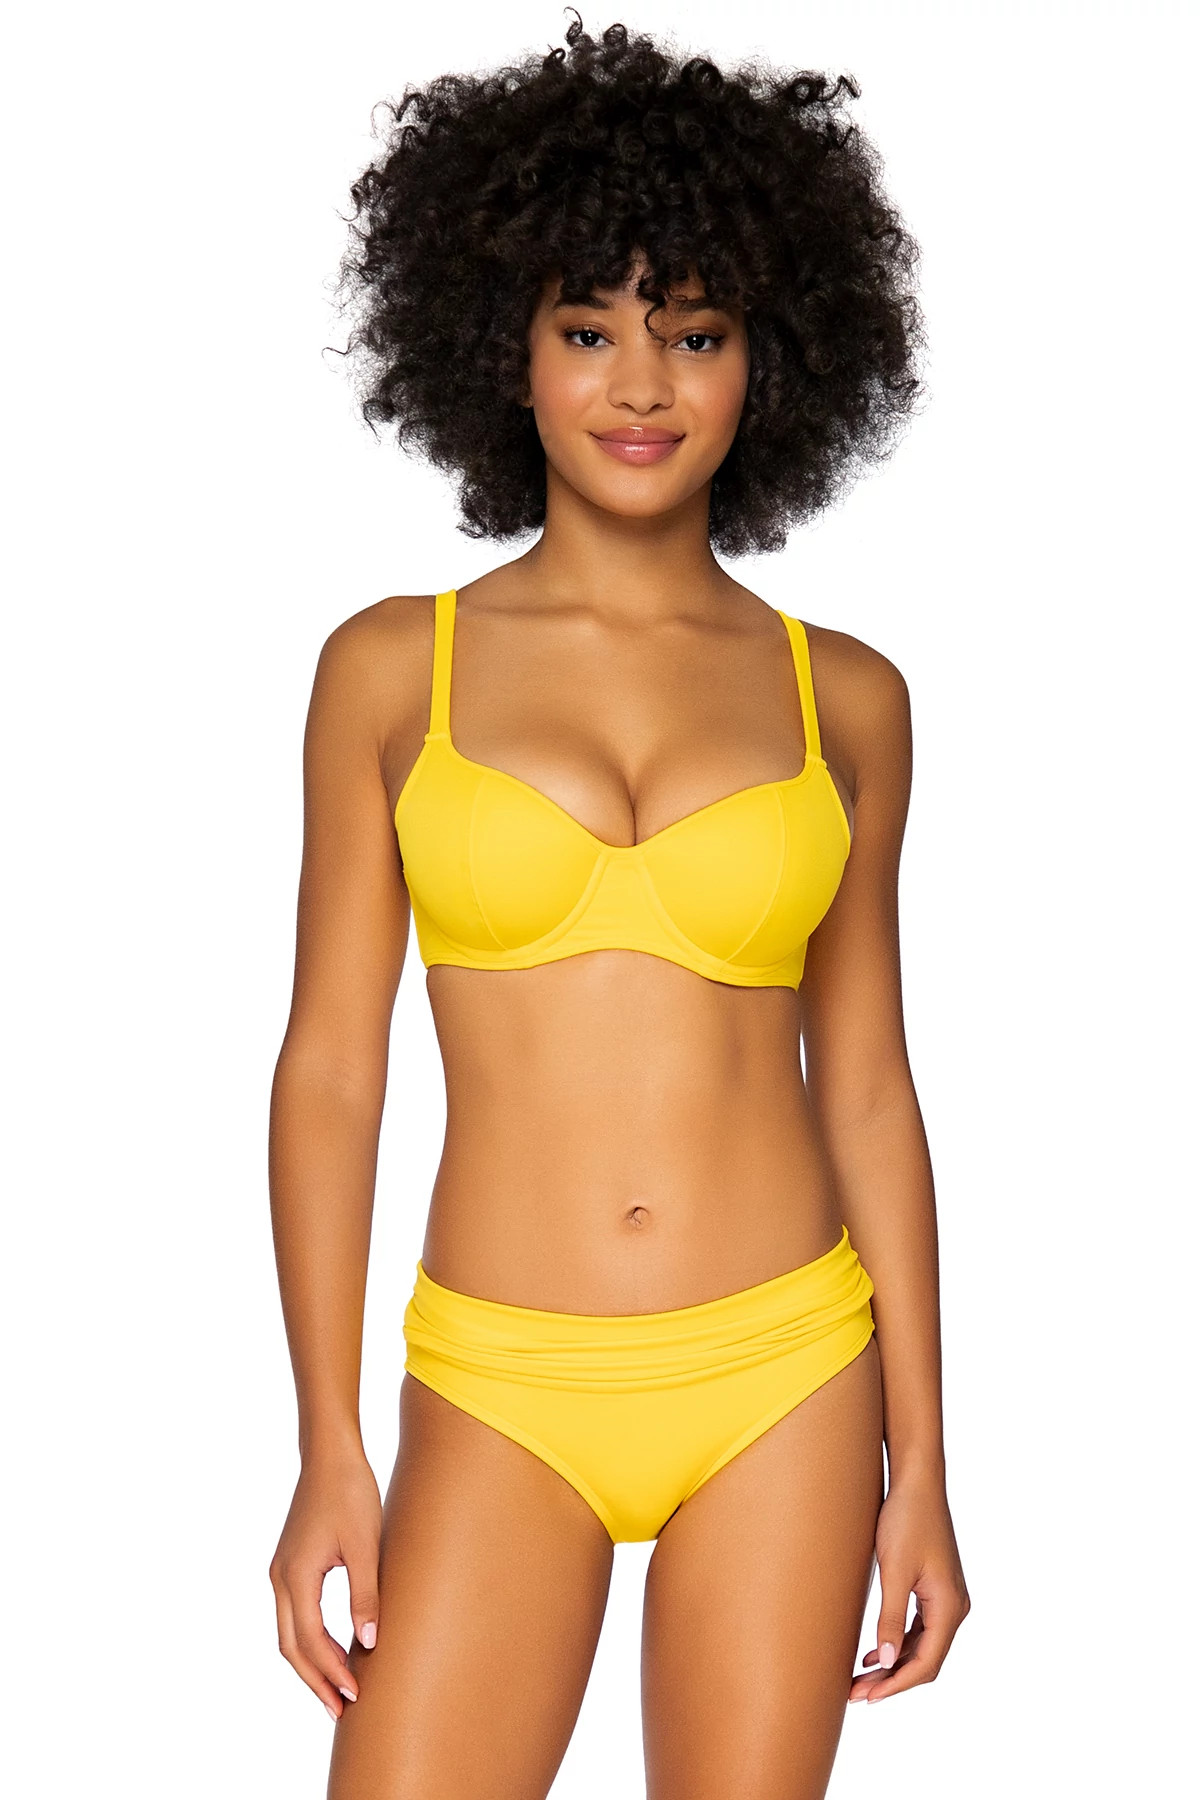 HAWAIIAN SUN Carmen Underwire Bikini Top (E-H Cup) image number 1